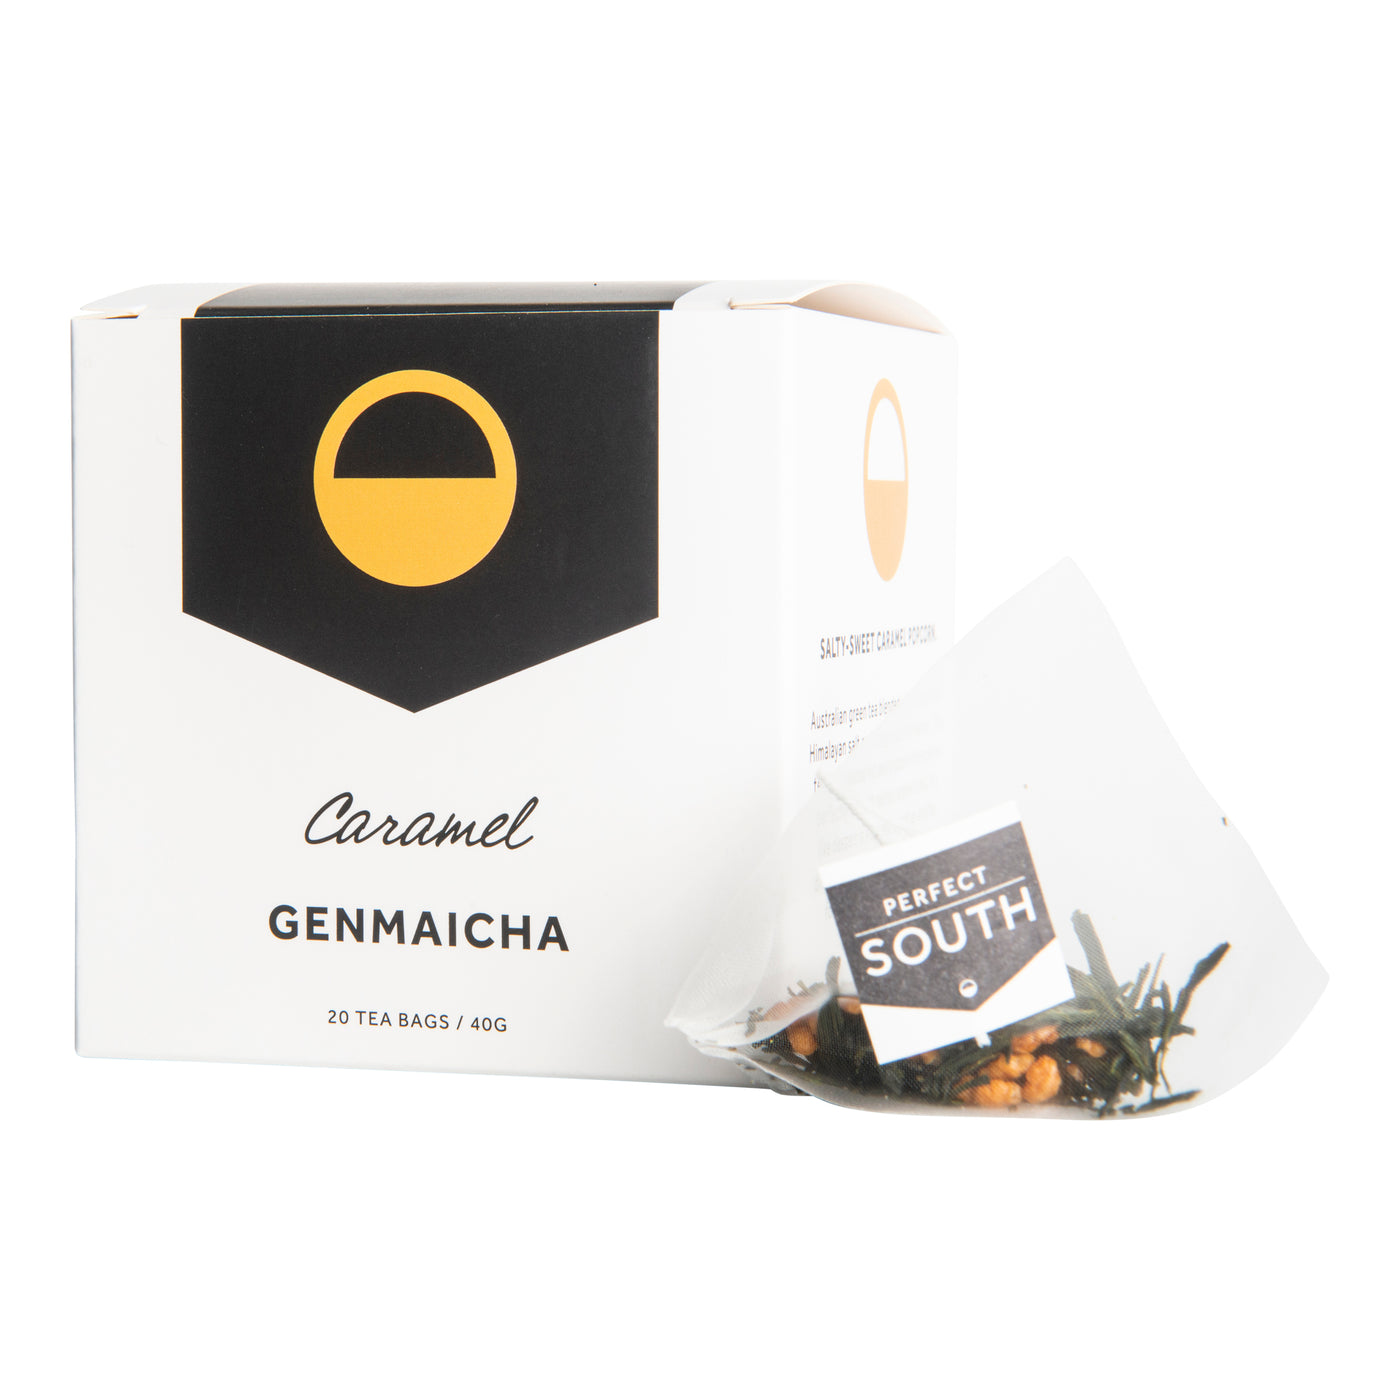 Caramel Genmaicha Pyramid Green Tea Bags